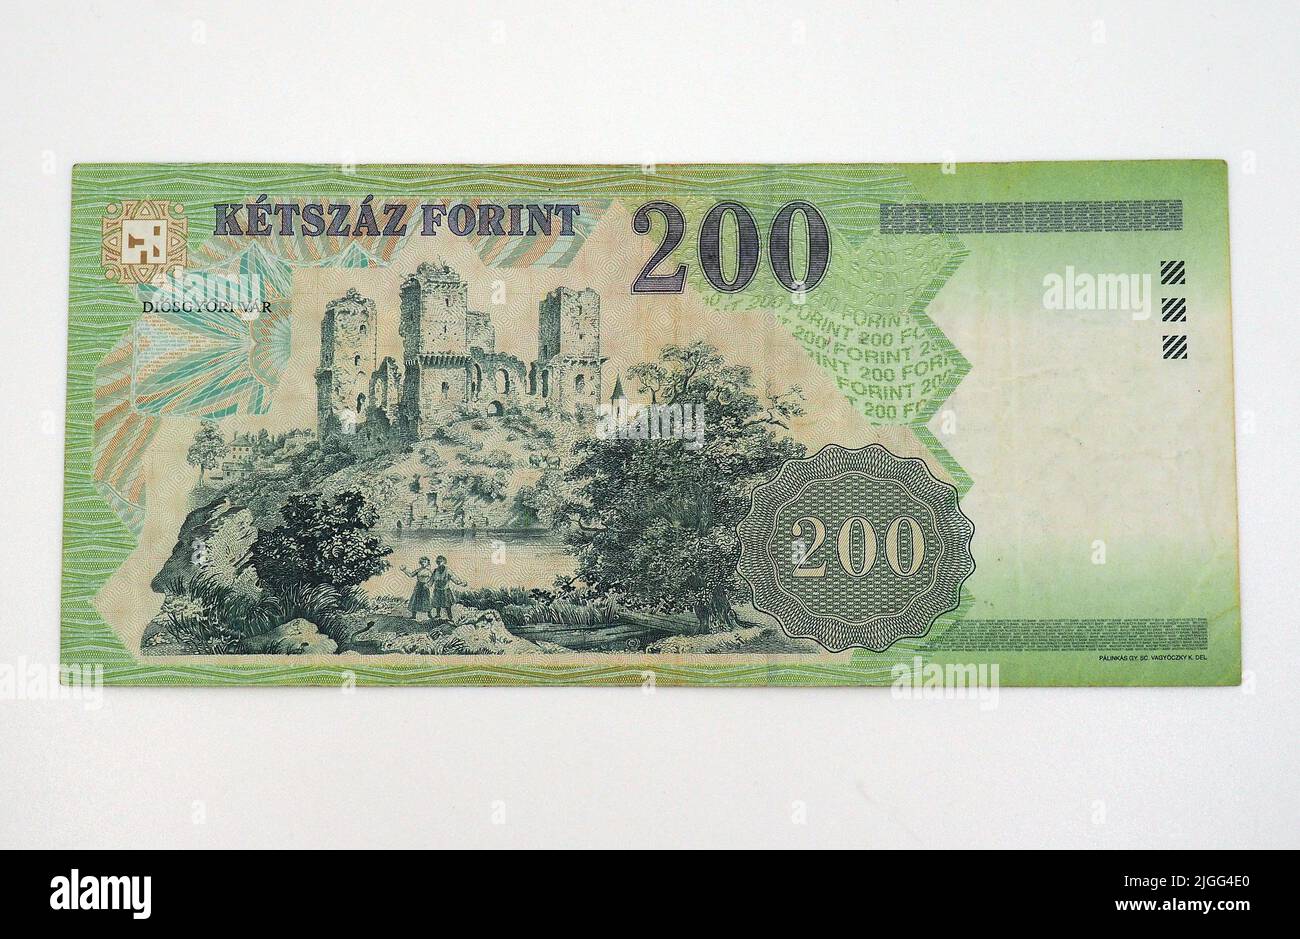 old two hundred HUF banknote (1998–2009), Castle of Diósgyőr, hungarian forint, Hungary, Magyarország, Europe Stock Photo